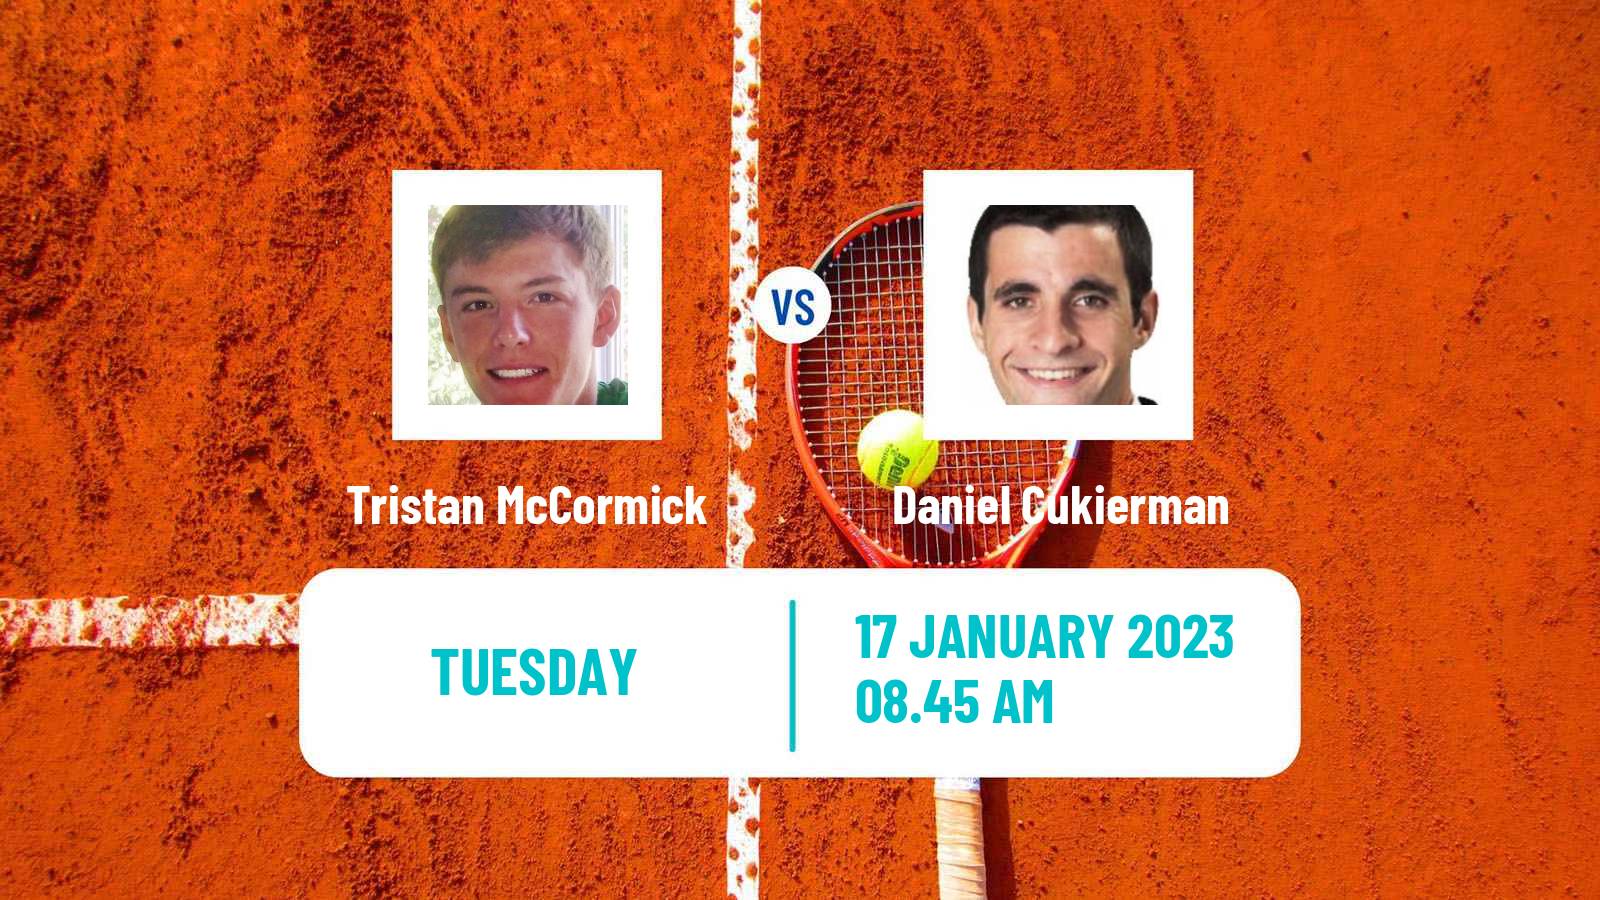 Tennis ITF Tournaments Tristan McCormick - Daniel Cukierman